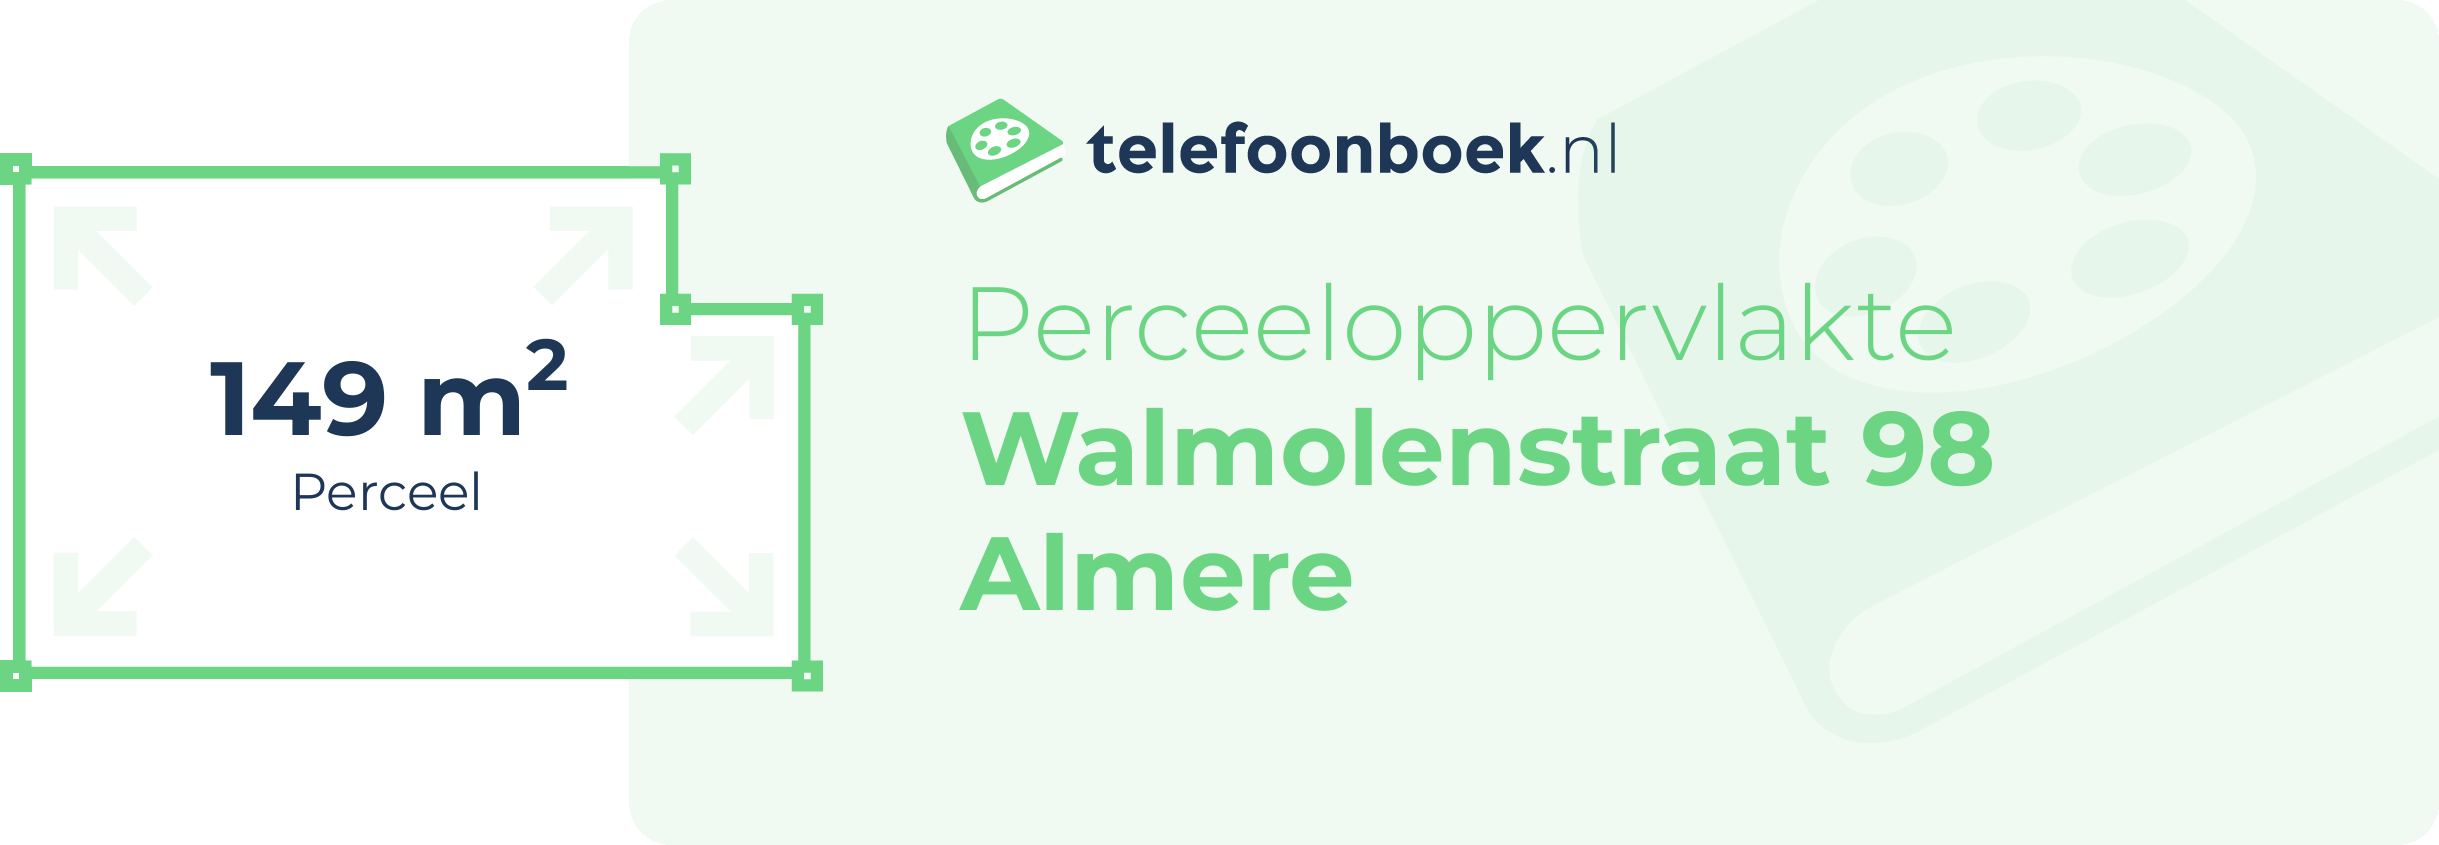 Perceeloppervlakte Walmolenstraat 98 Almere